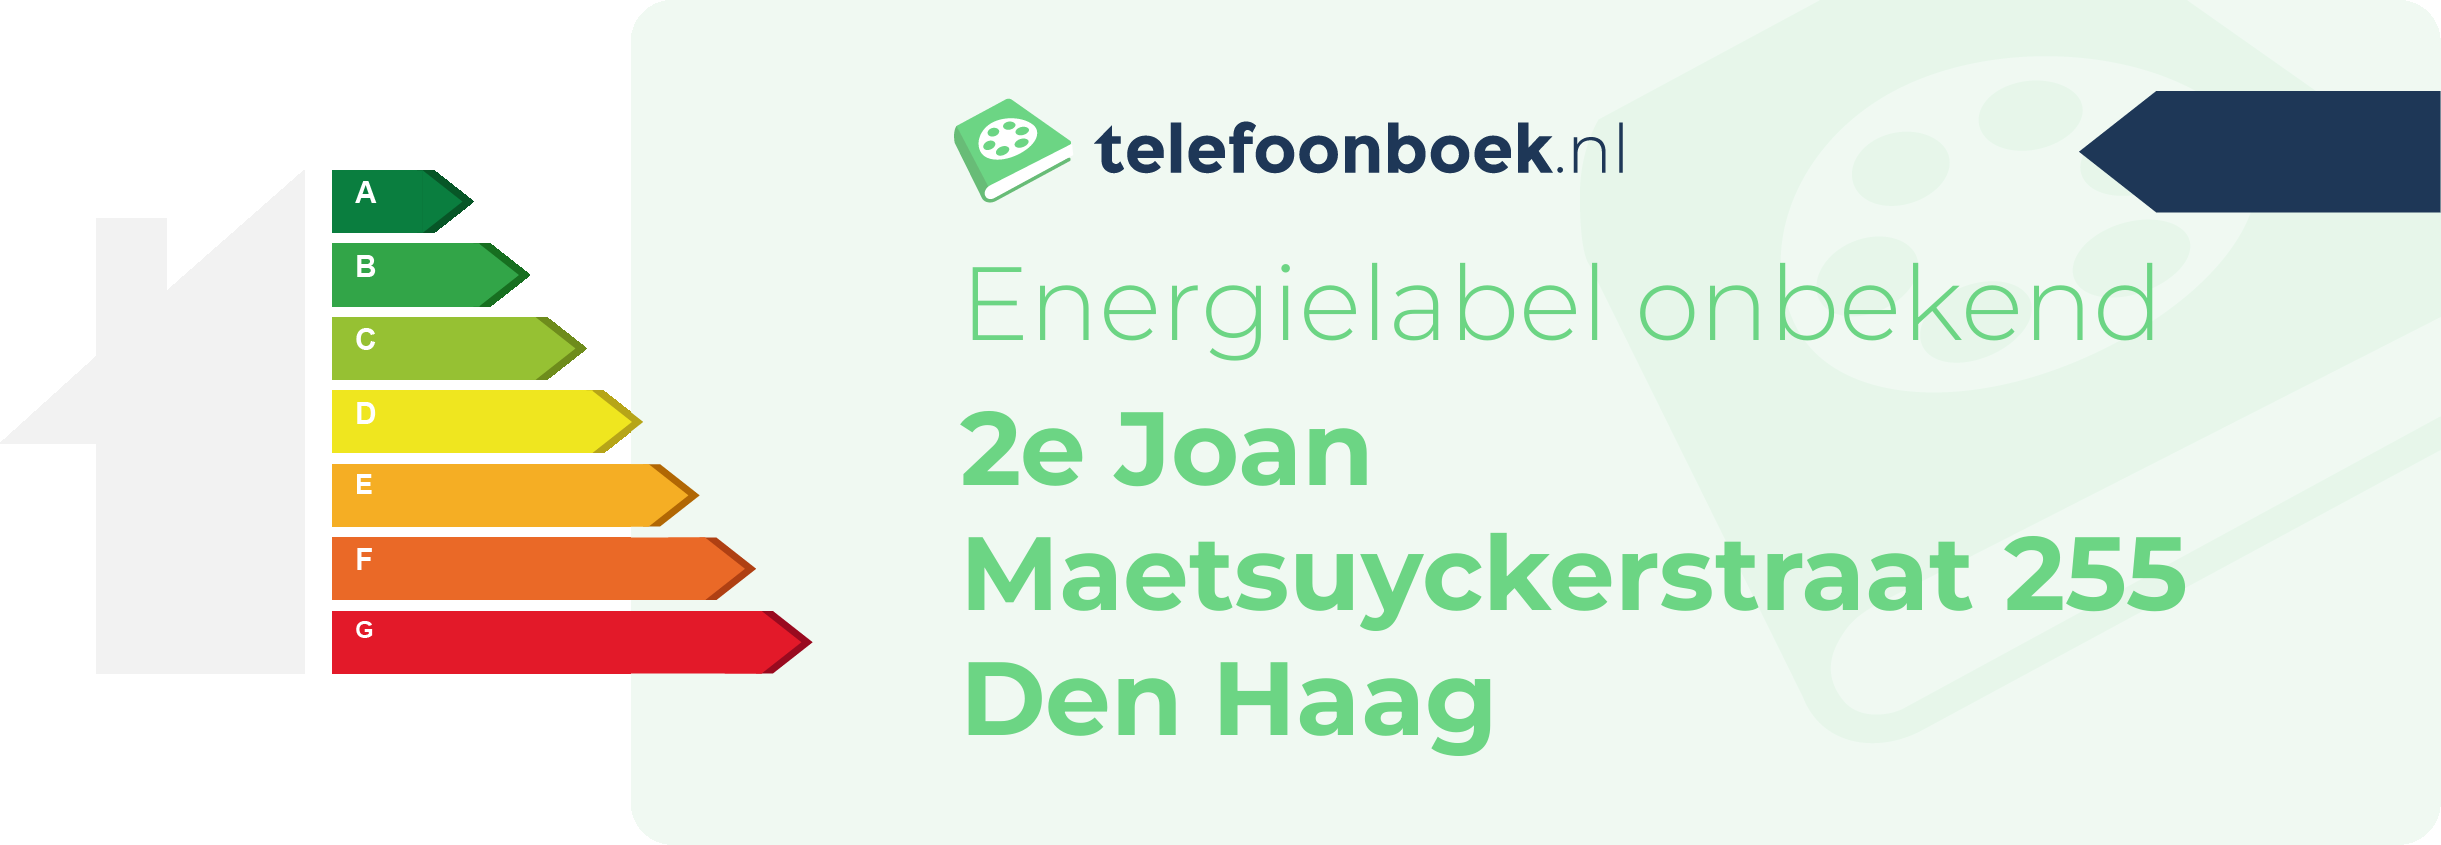 Energielabel 2e Joan Maetsuyckerstraat 255 Den Haag